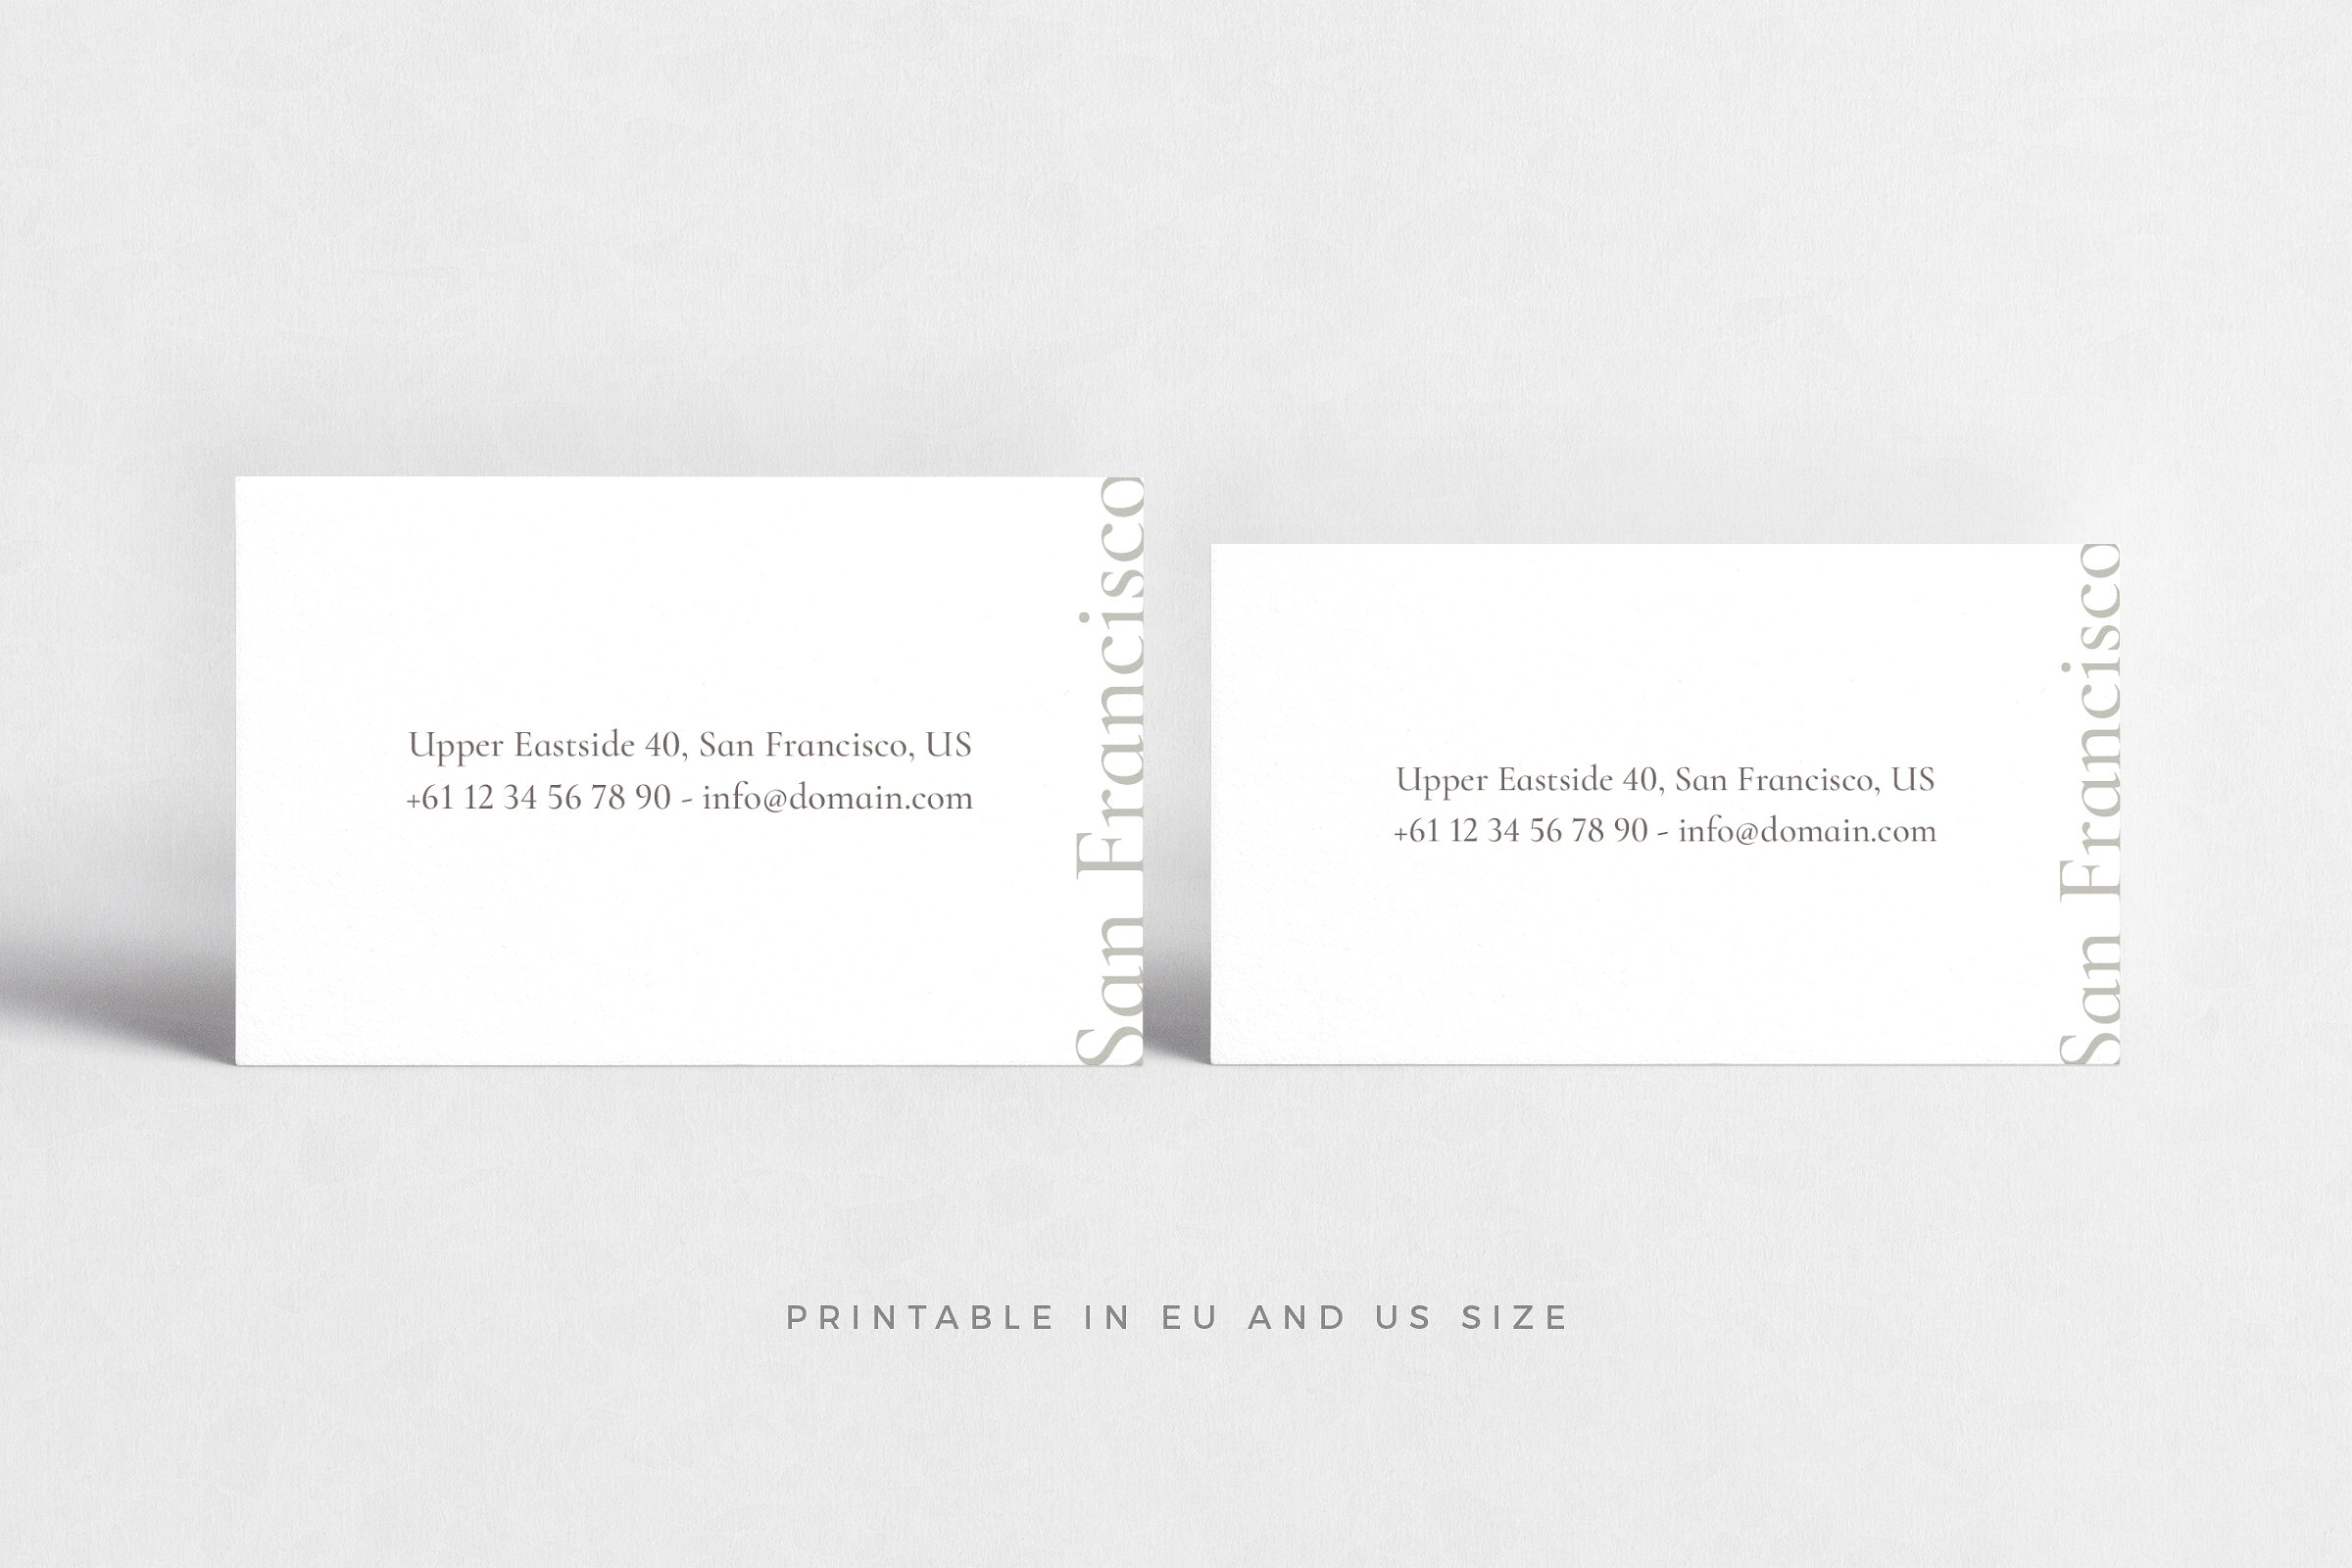 极简主义企业名片设计模板2 San Francisco Business Cards插图(2)